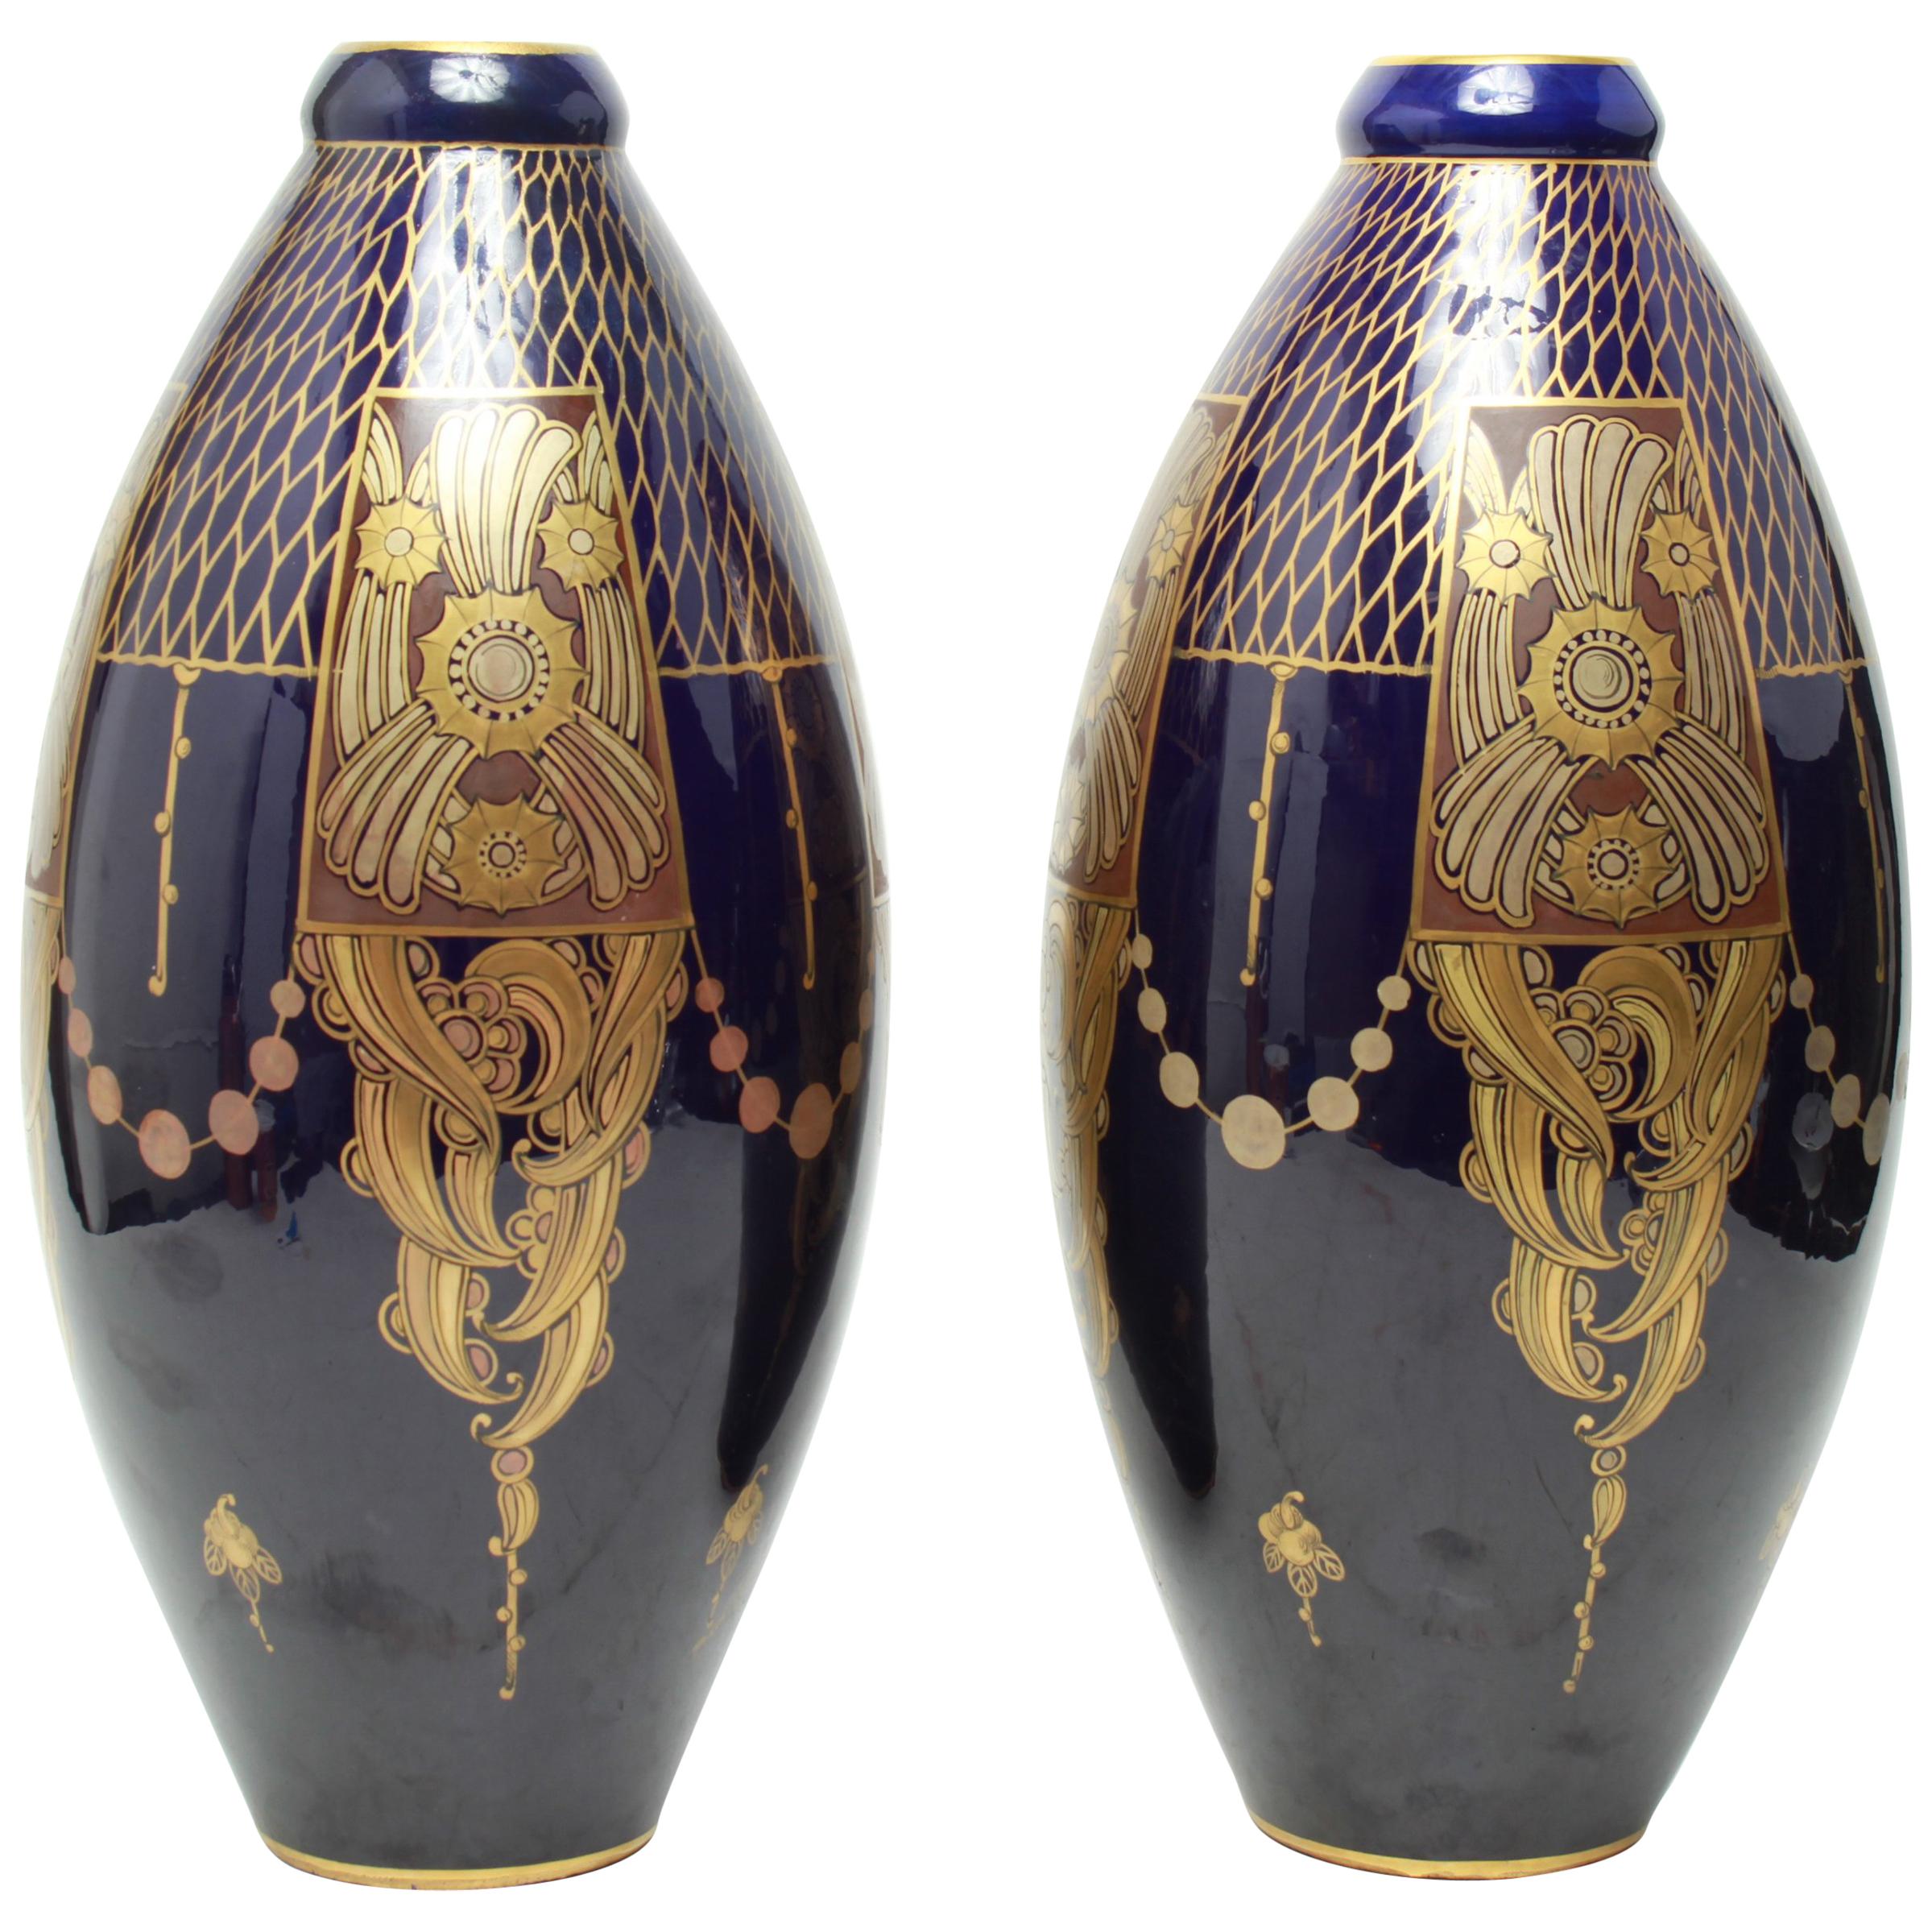 Pinon-Heuze French Art Deco Porcelain Vases